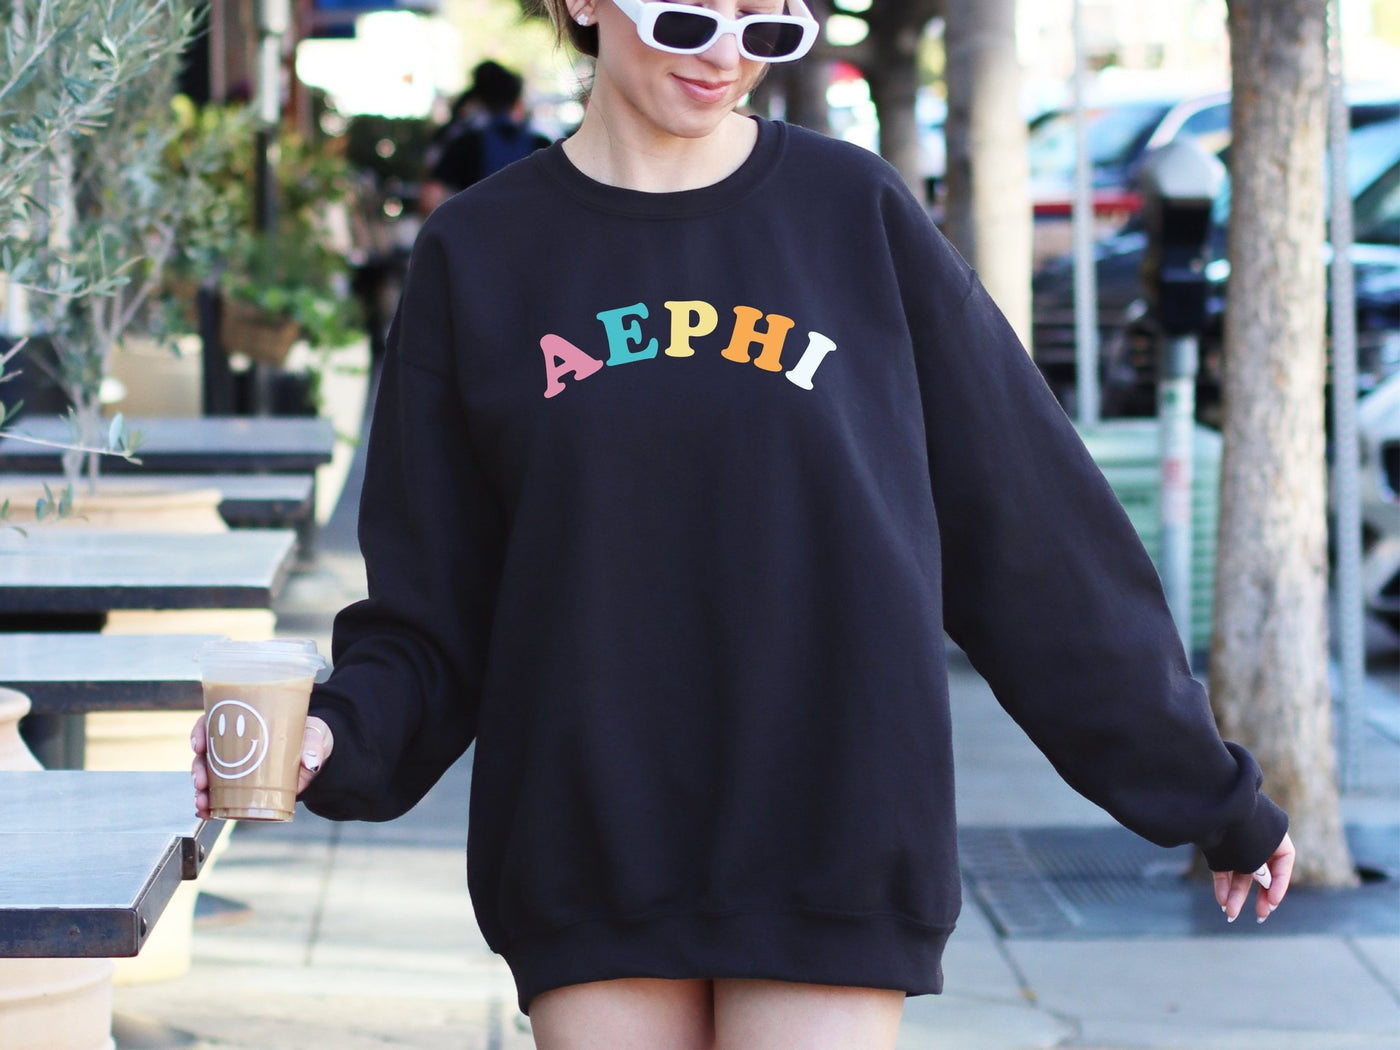 Alpha Epsilon Phi AEPhi Colorful Text Cute Sorority Crewneck Sweatshirt